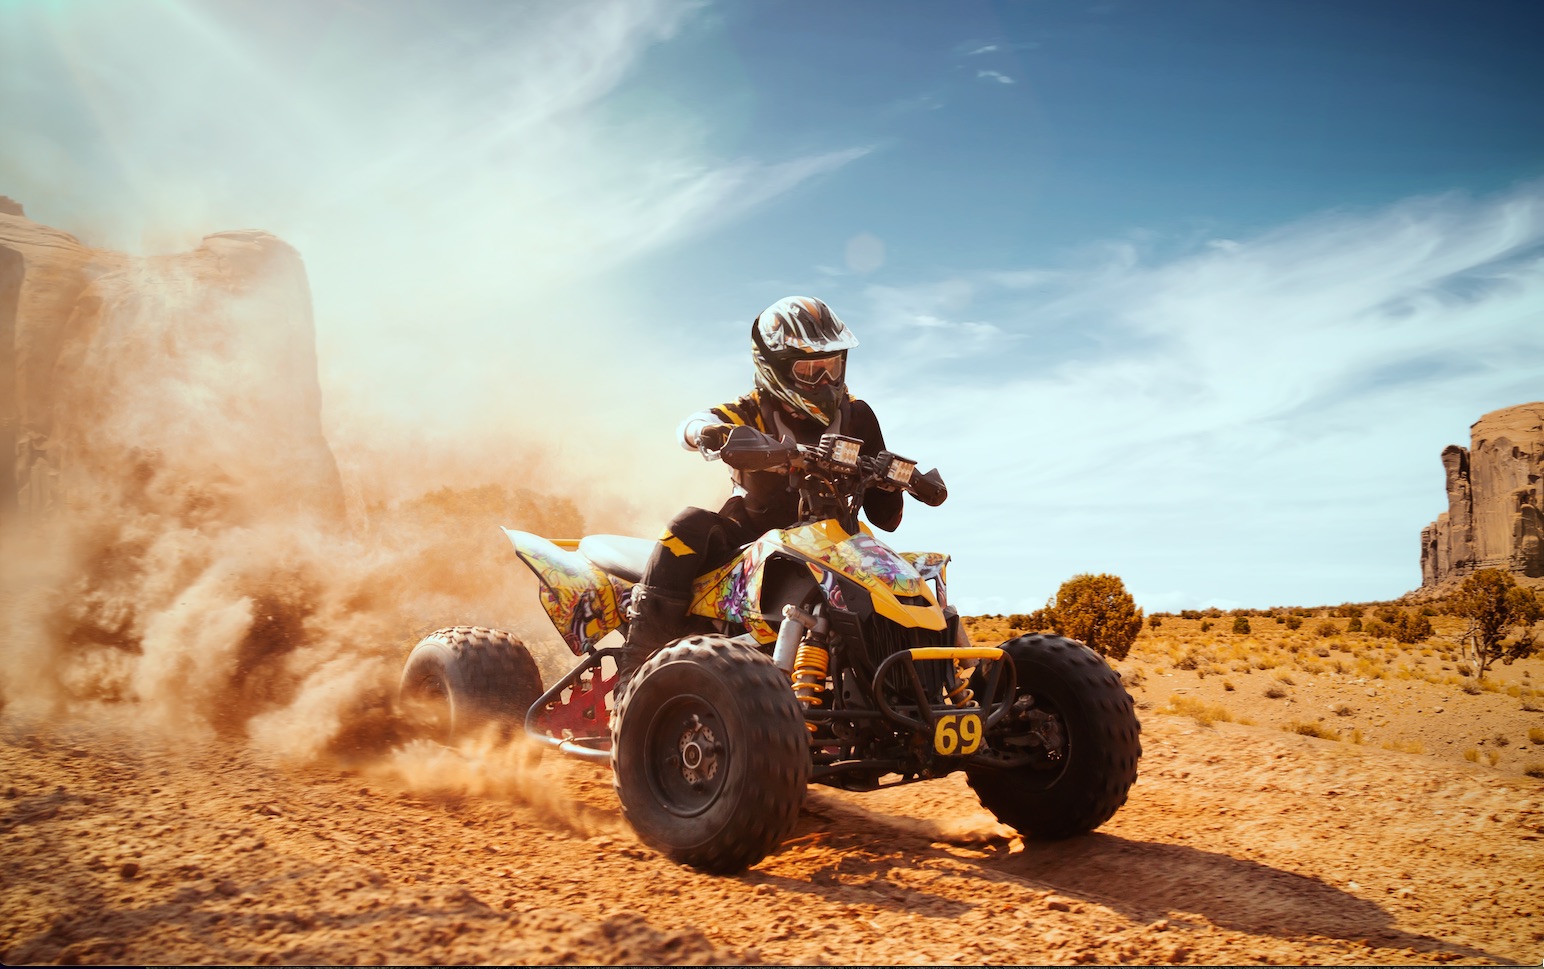 helmeted rider driving an ATV through dirt kicking up a cloud of dust